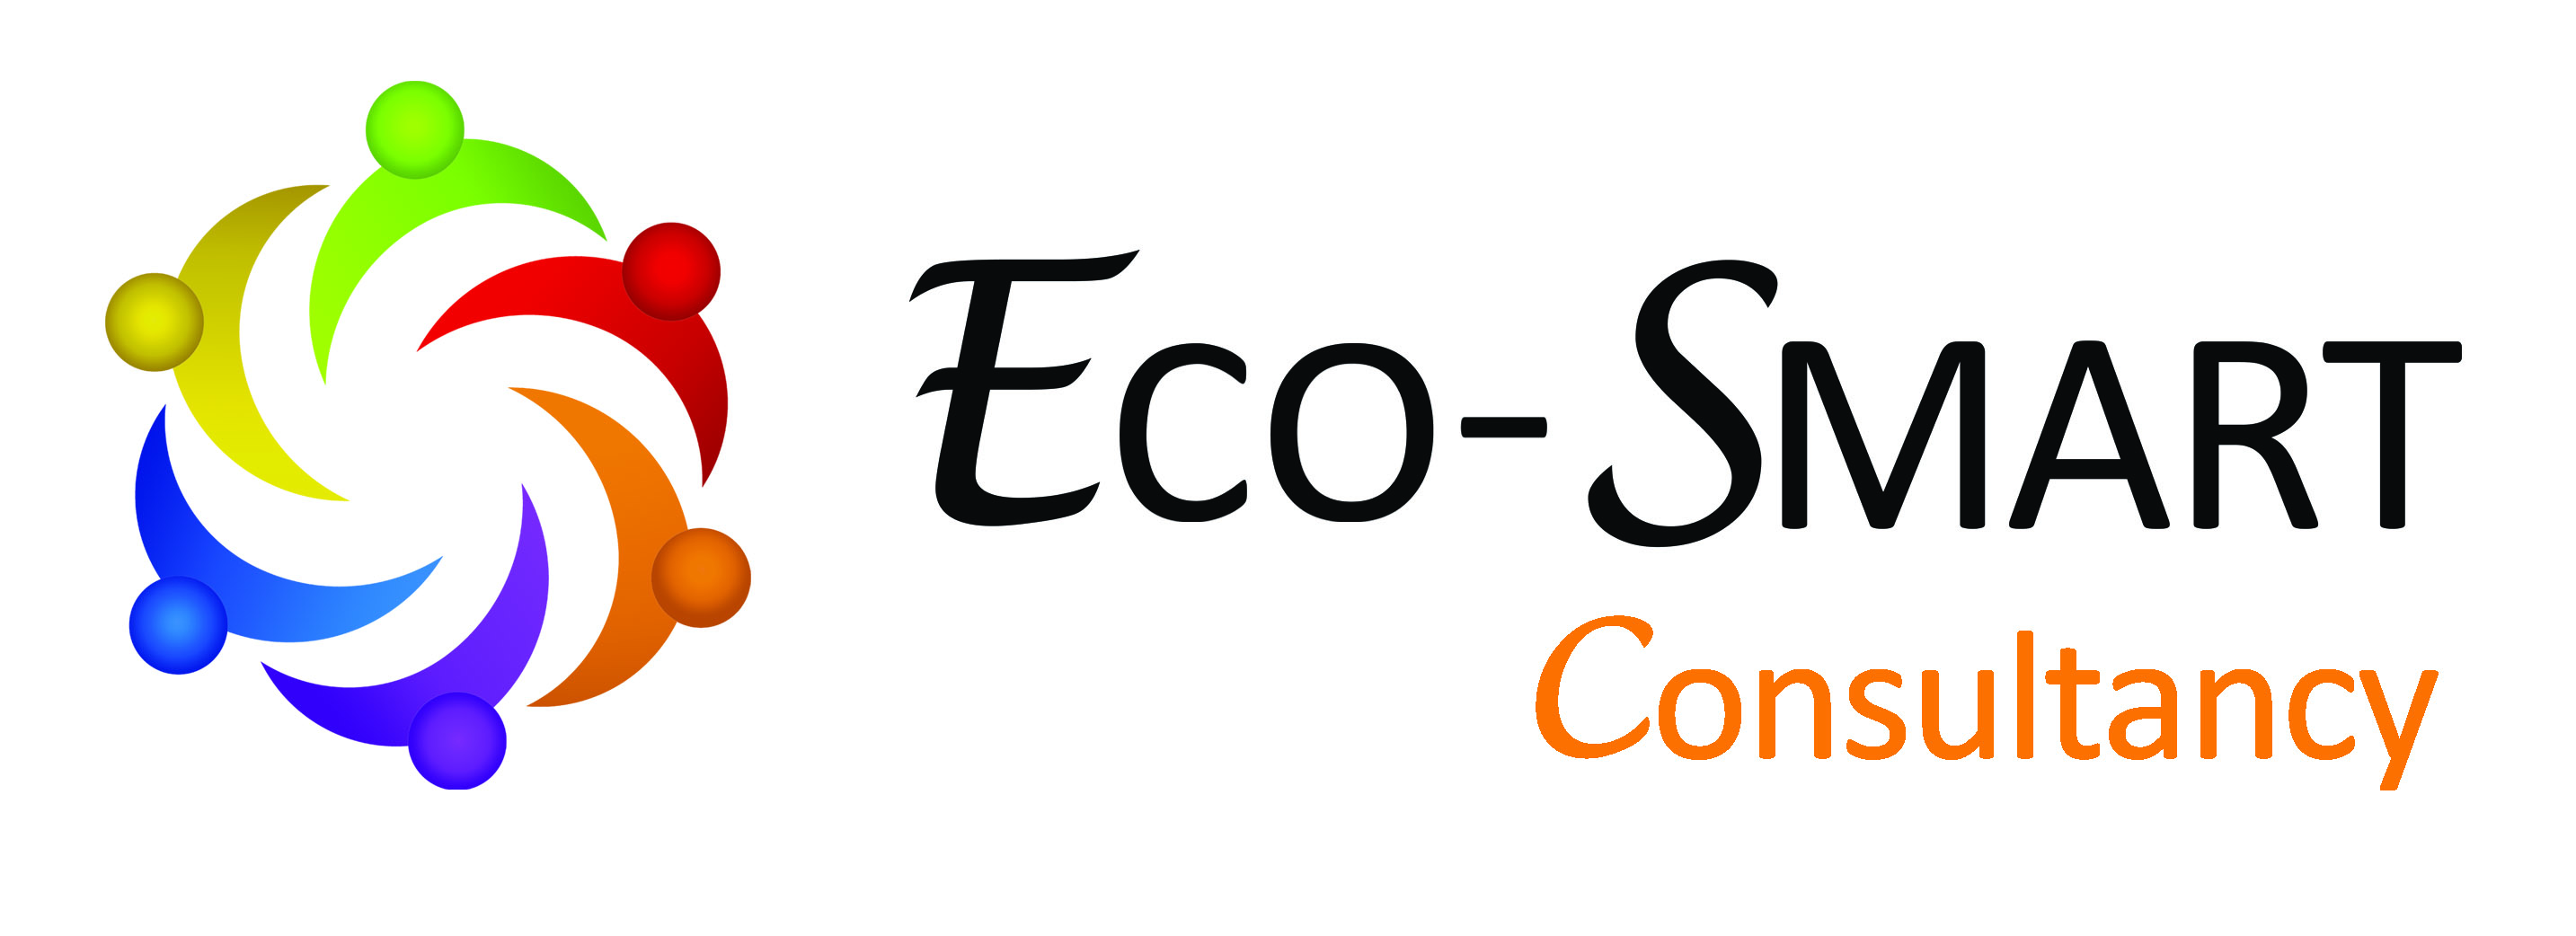 Eco-Smart Consultancy Ltd